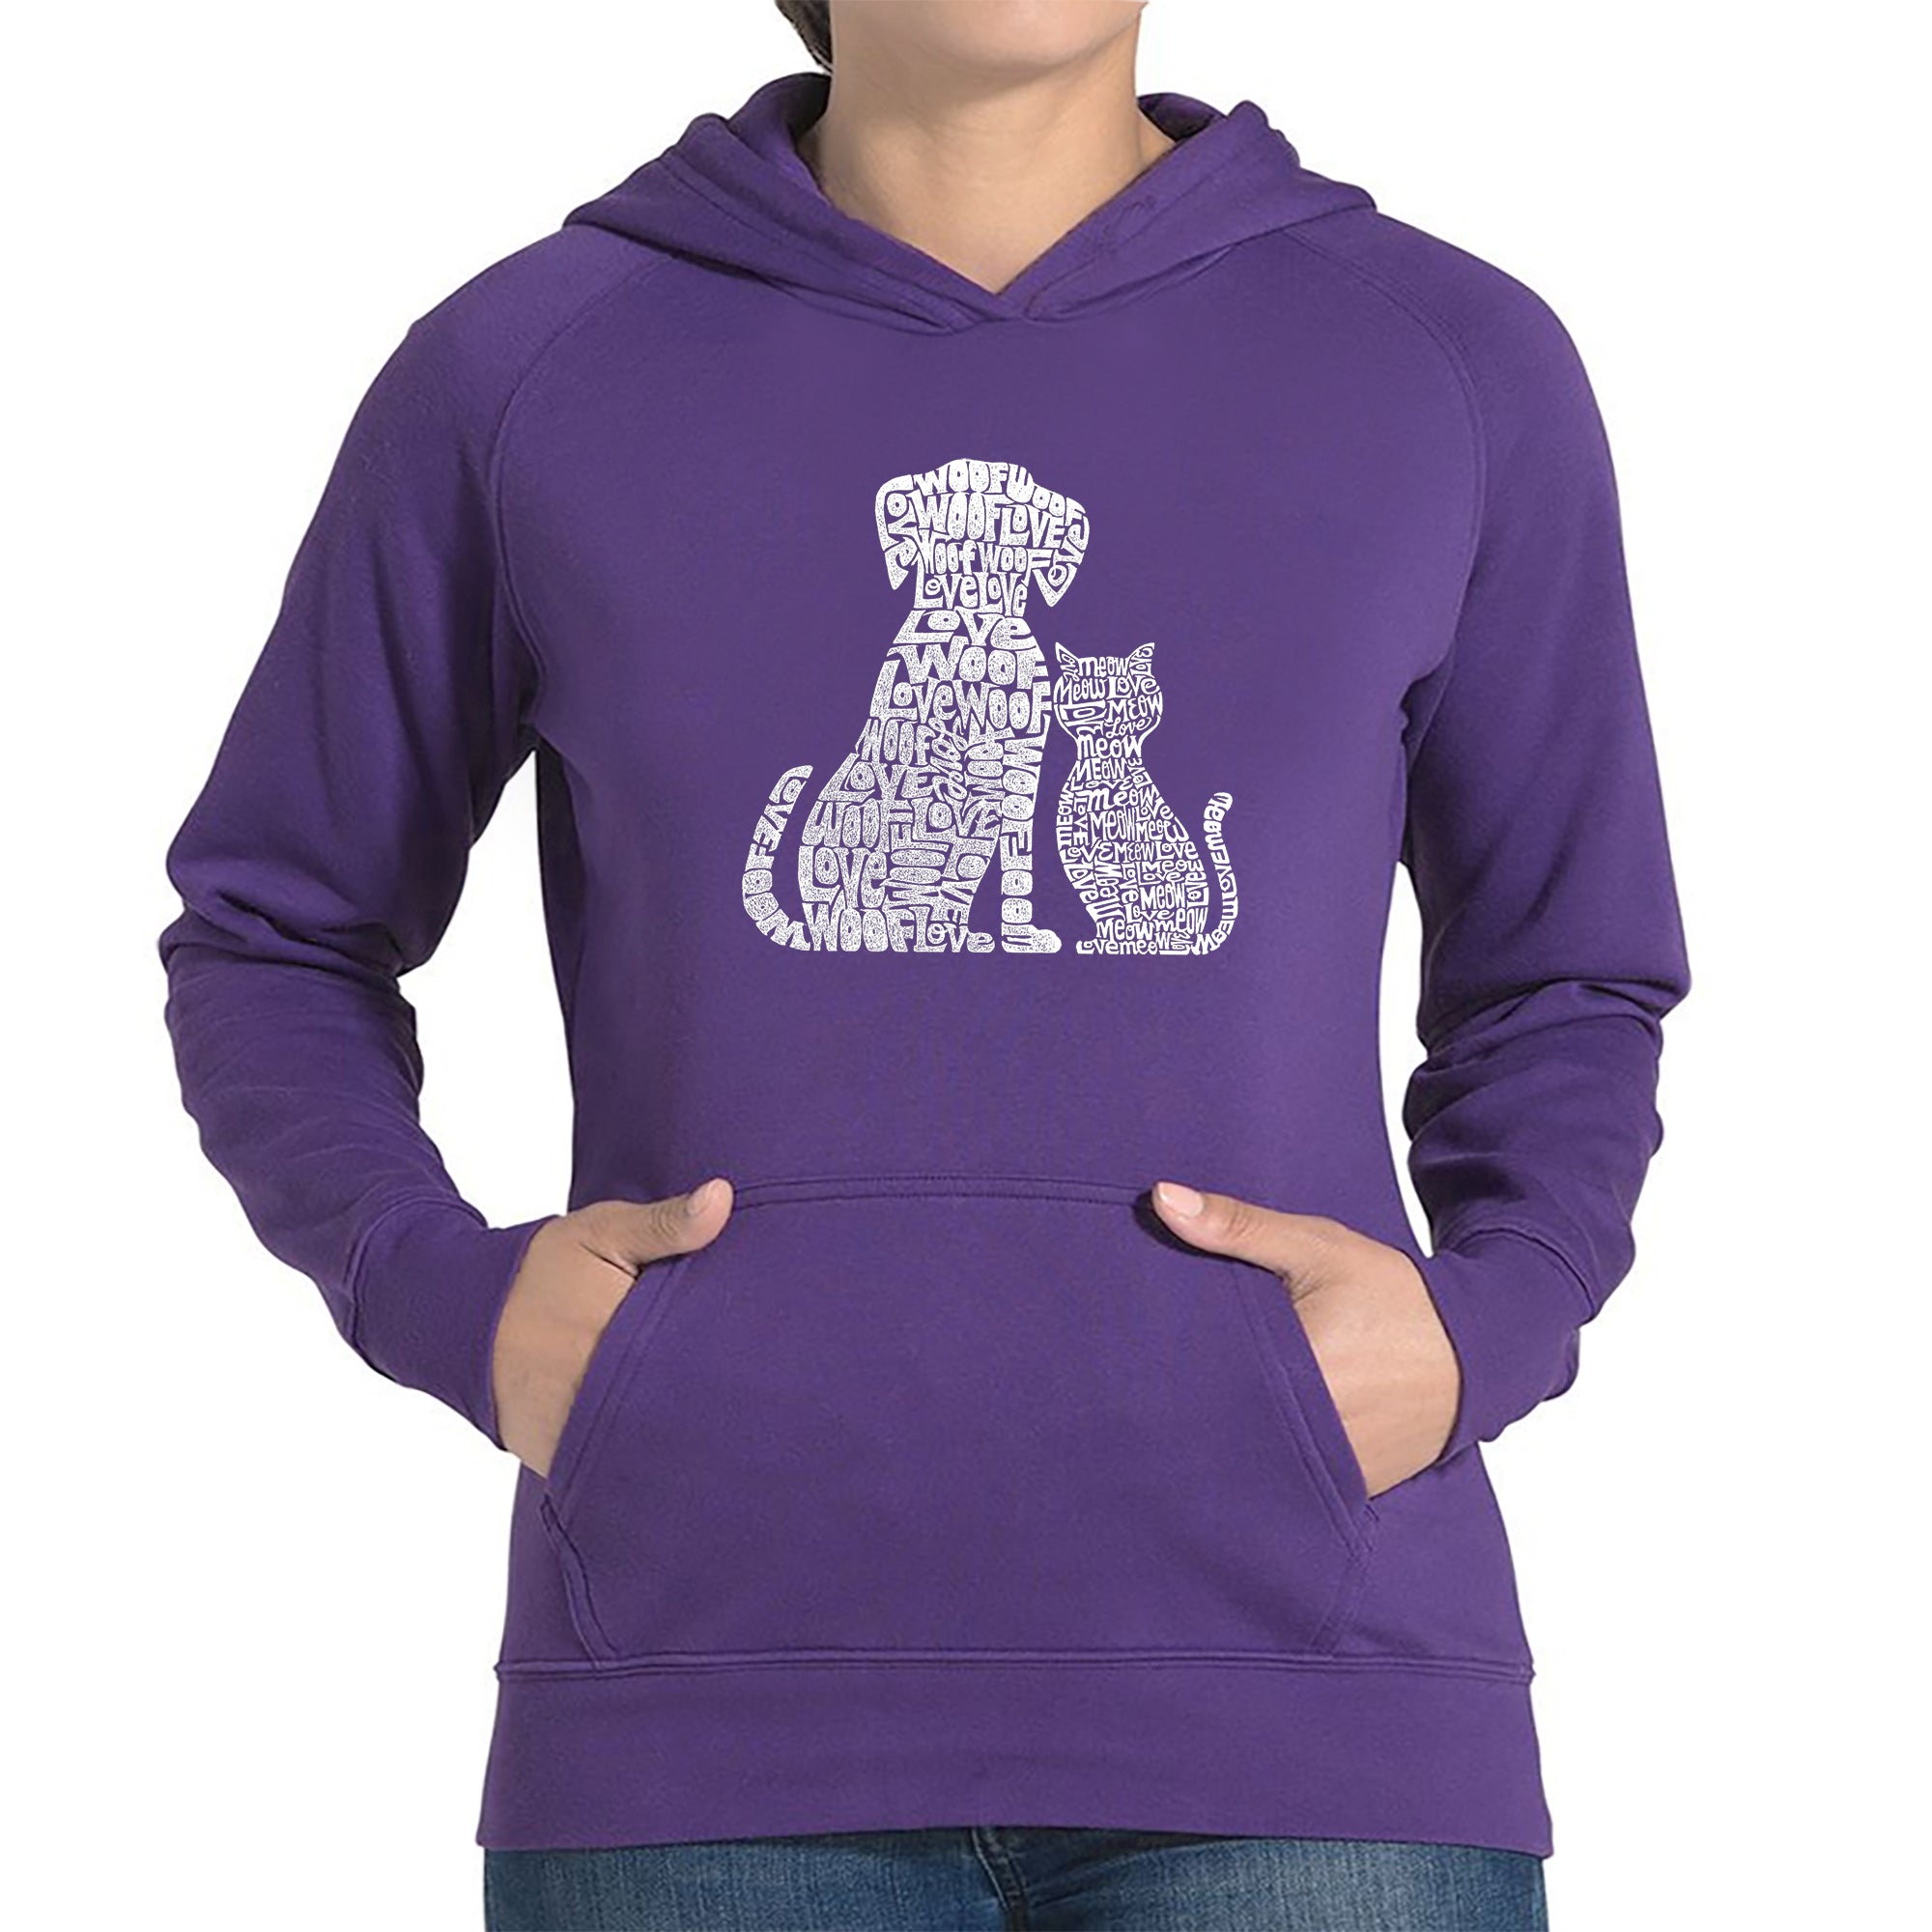 Dogs And Cats - Women's Word Art Hooded Sweatshirt - Purple - X-Large